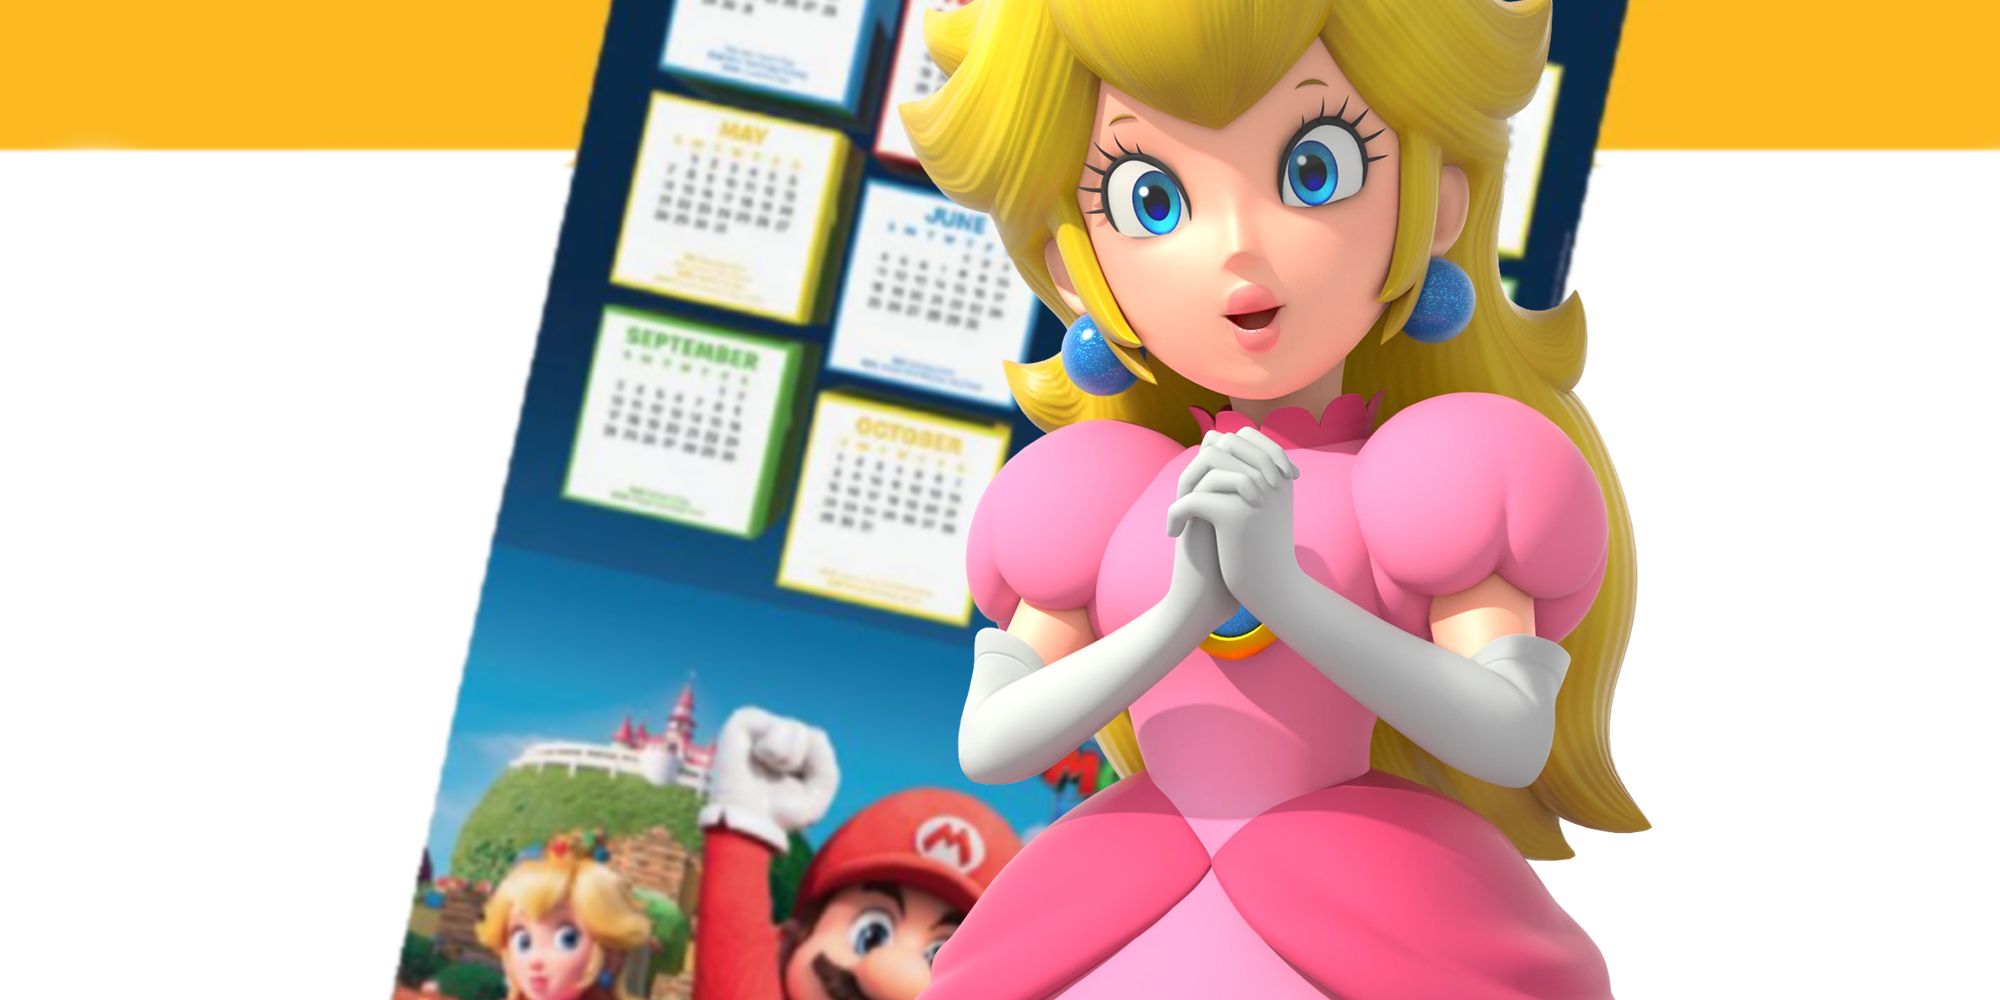 Peach's Super Mario Bros. Movie Design Has Leaked Thanks To A McDonald